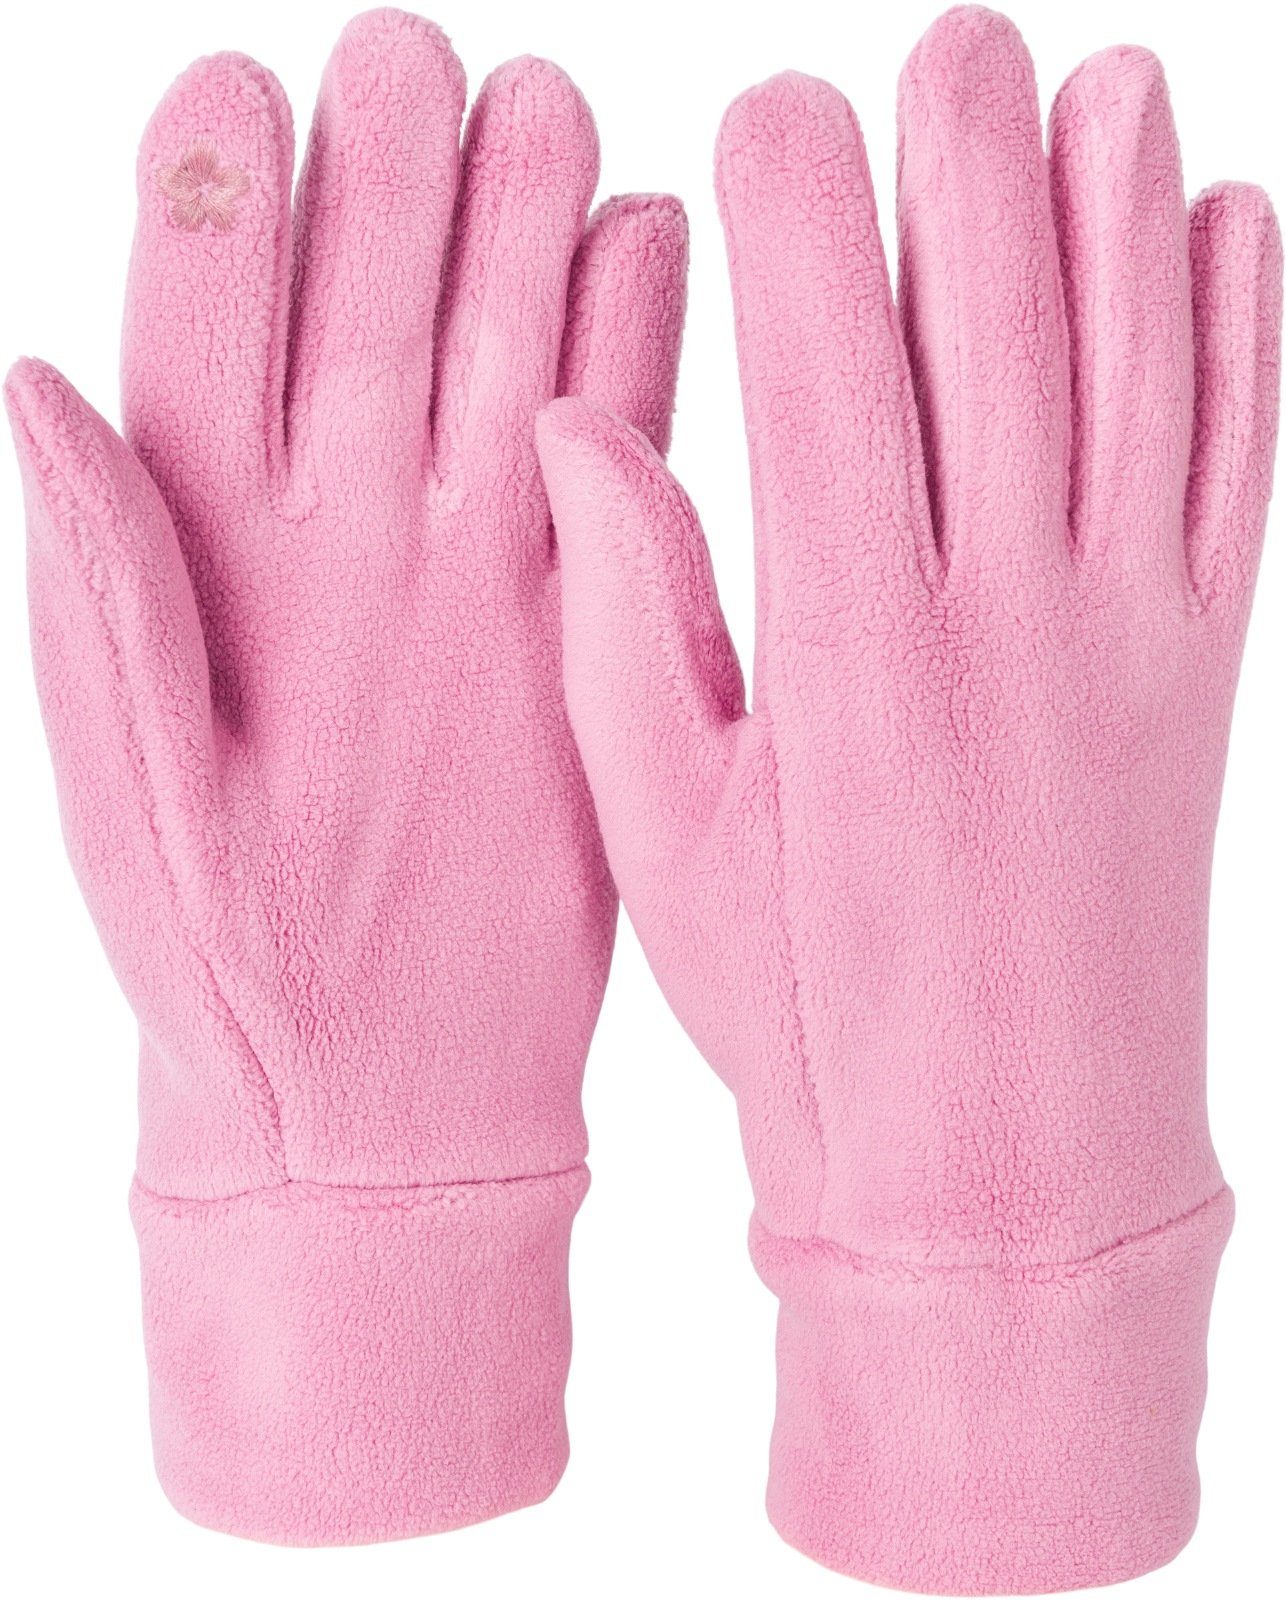 styleBREAKER Fleecehandschuhe Einfarbige Touchscreen Fleece Handschuhe Altrose